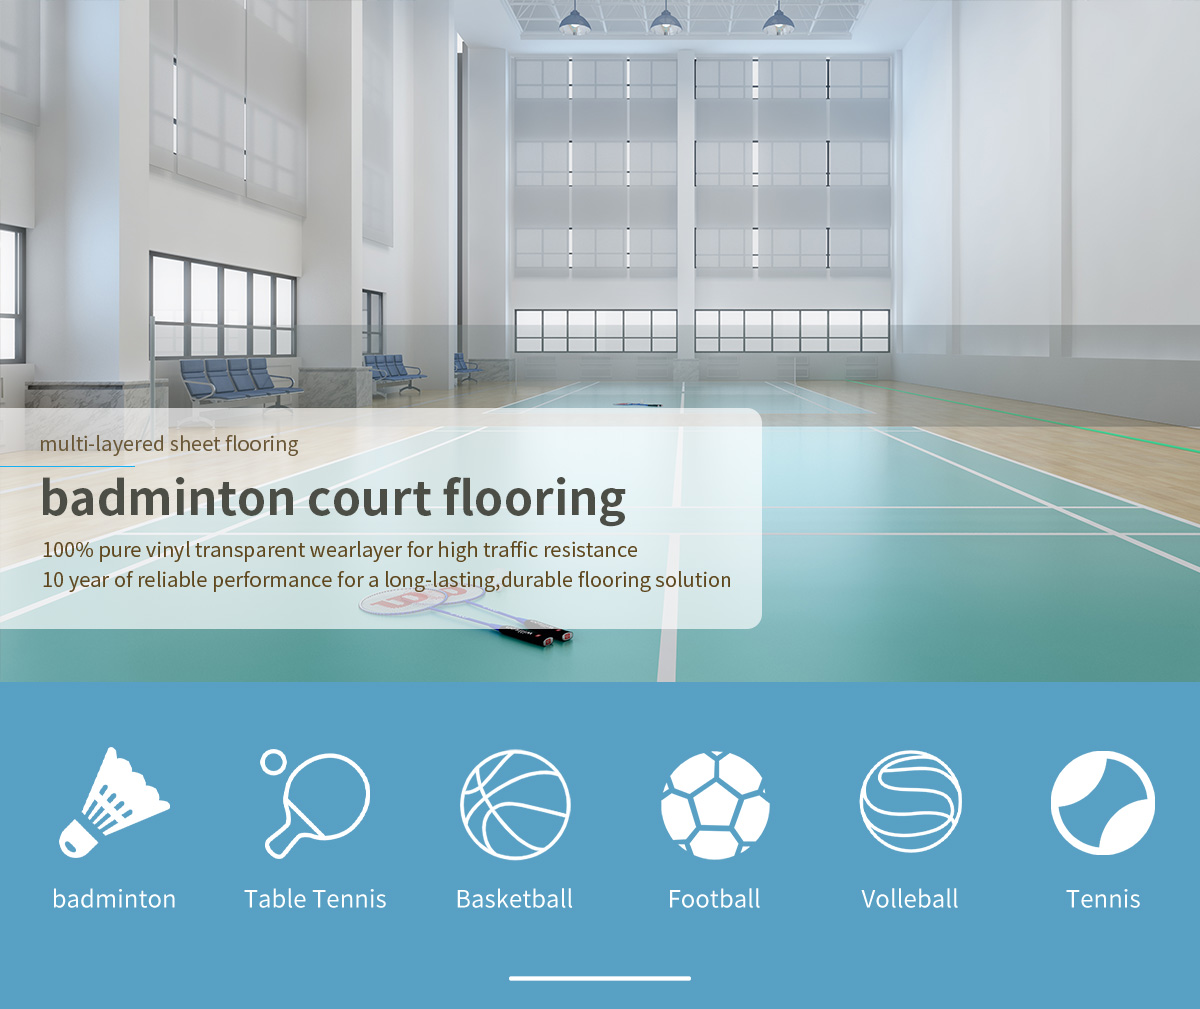 34badminton-court-flooring_01(1).jpg